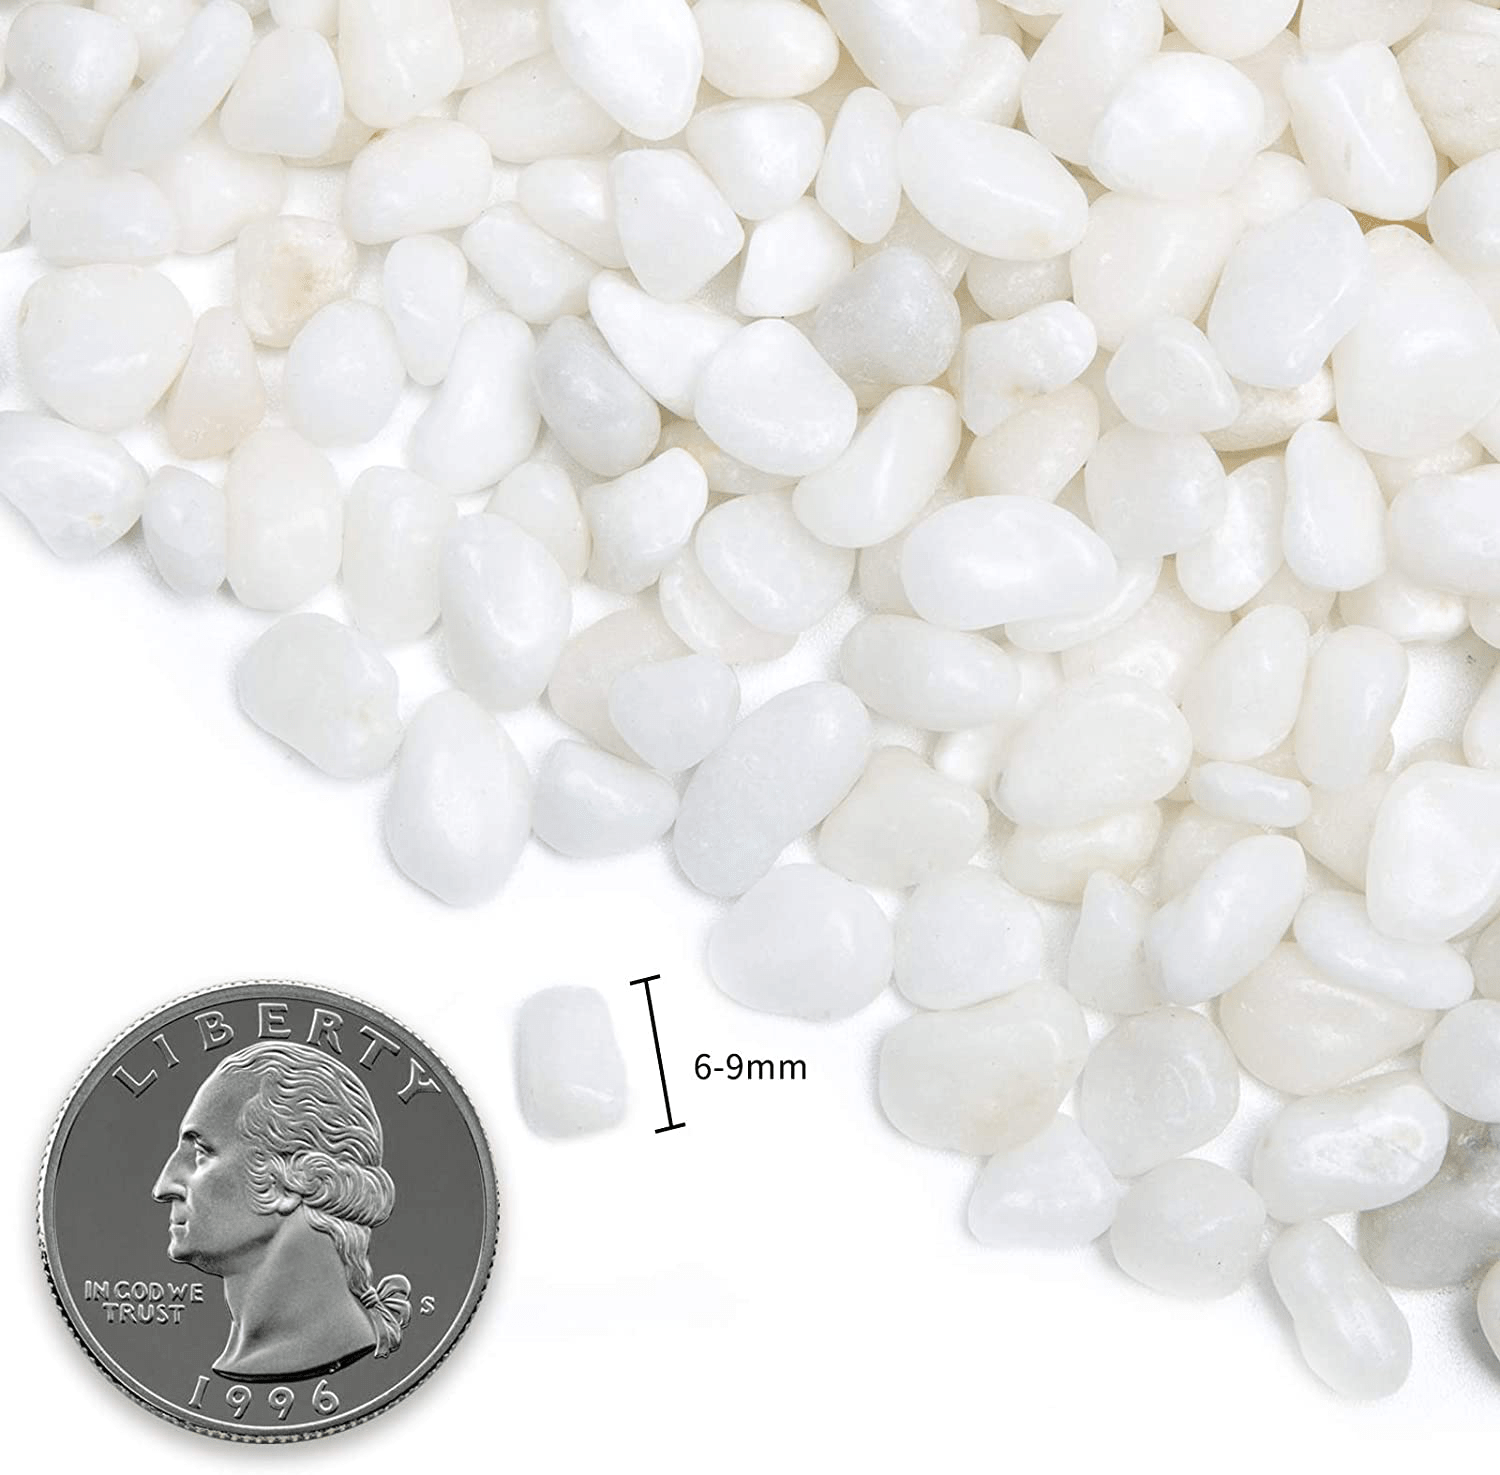 2.7 Lb Natural Polished Decorative White Pebbles - Small Stones 3/8" Gravel Size,River Rocks Pebbles for Plants, Home DIY Decor,Aquarium Gravel,Vase Fillers,Fairy Garden,Landscaping Outdoor Stones